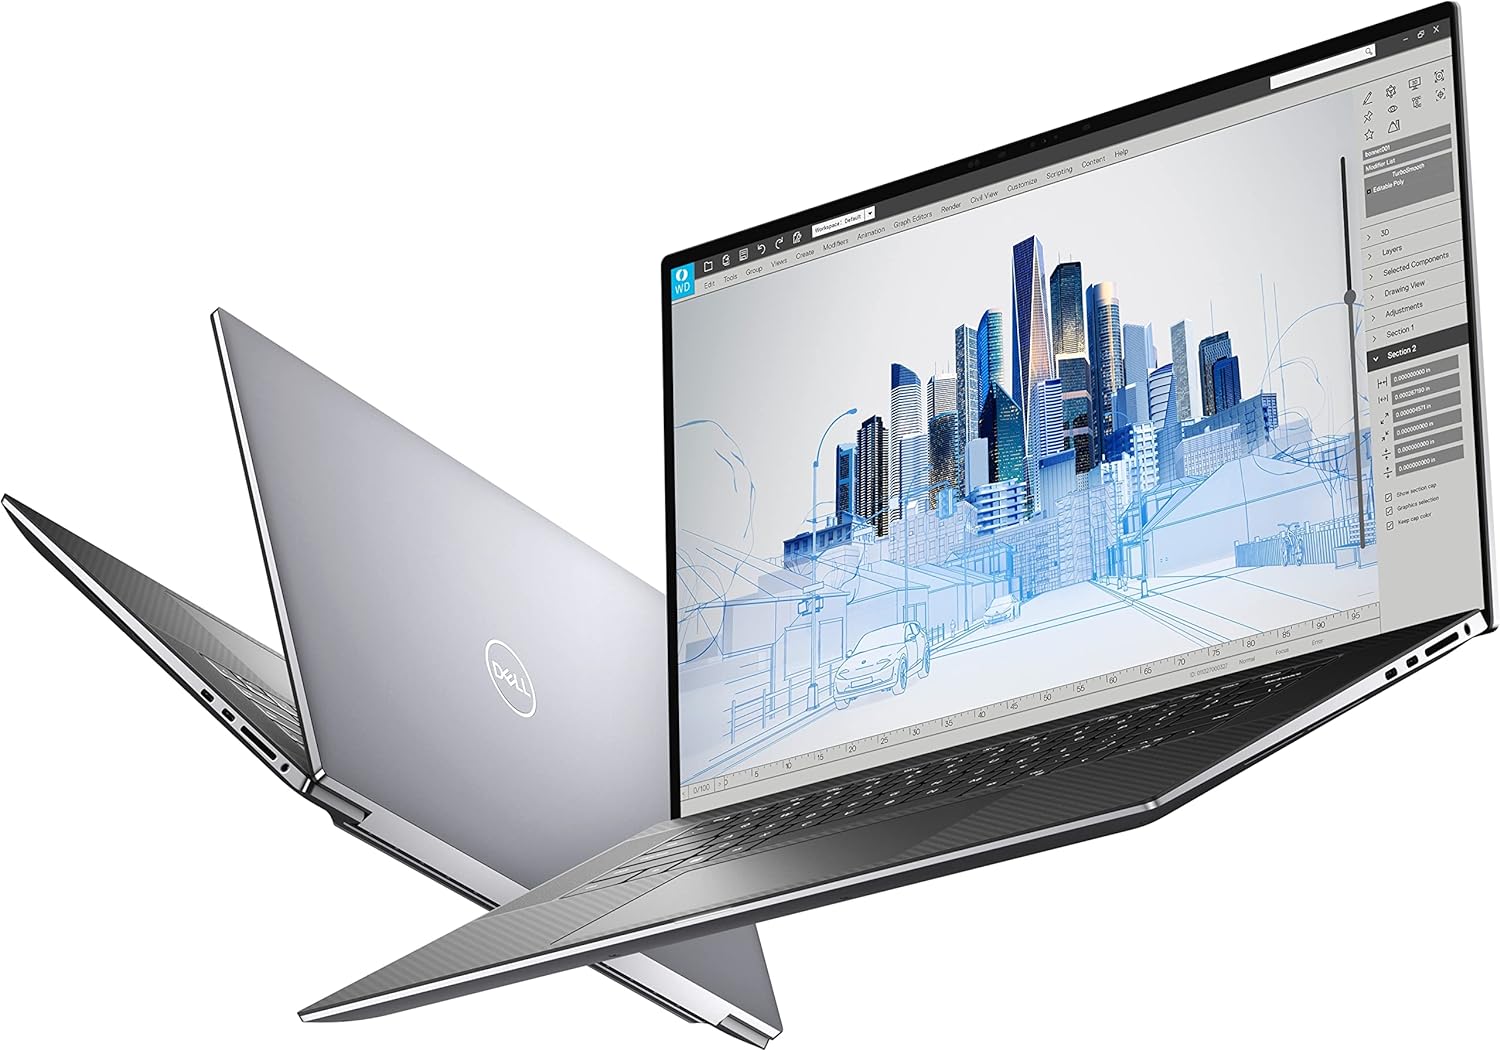 Dell Precision 5000 5760 Workstation Laptop Review